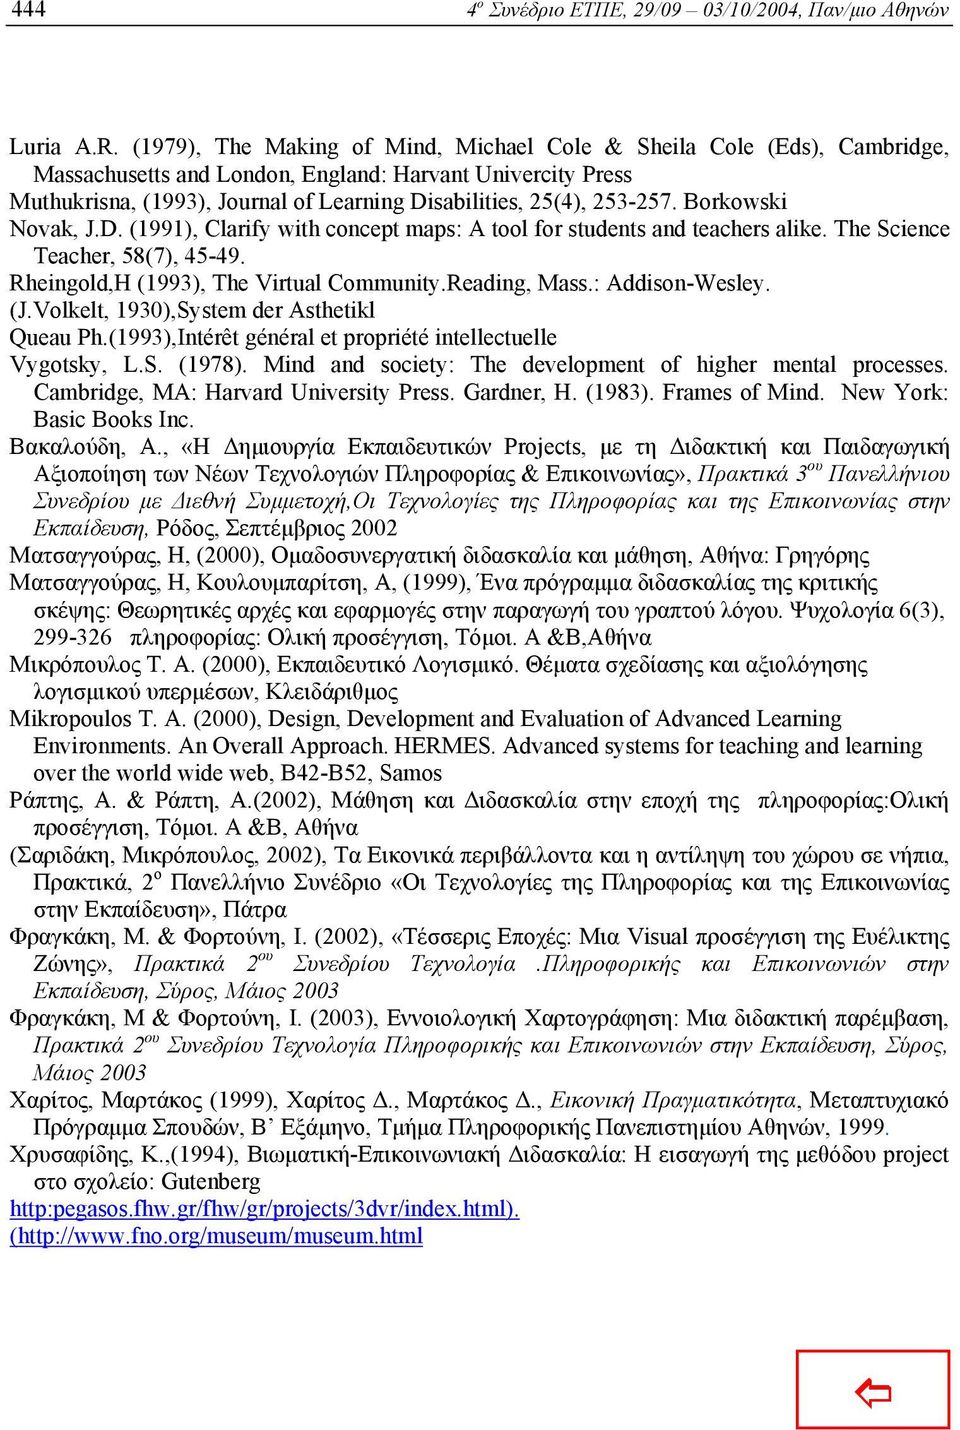 253-257. Borkowski Novak, J.D. (1991), Clarify with concept maps: A tool for students and teachers alike. The Science Teacher, 58(7), 45-49. Rheingold,H (1993), The Virtual Community.Reading, Mass.